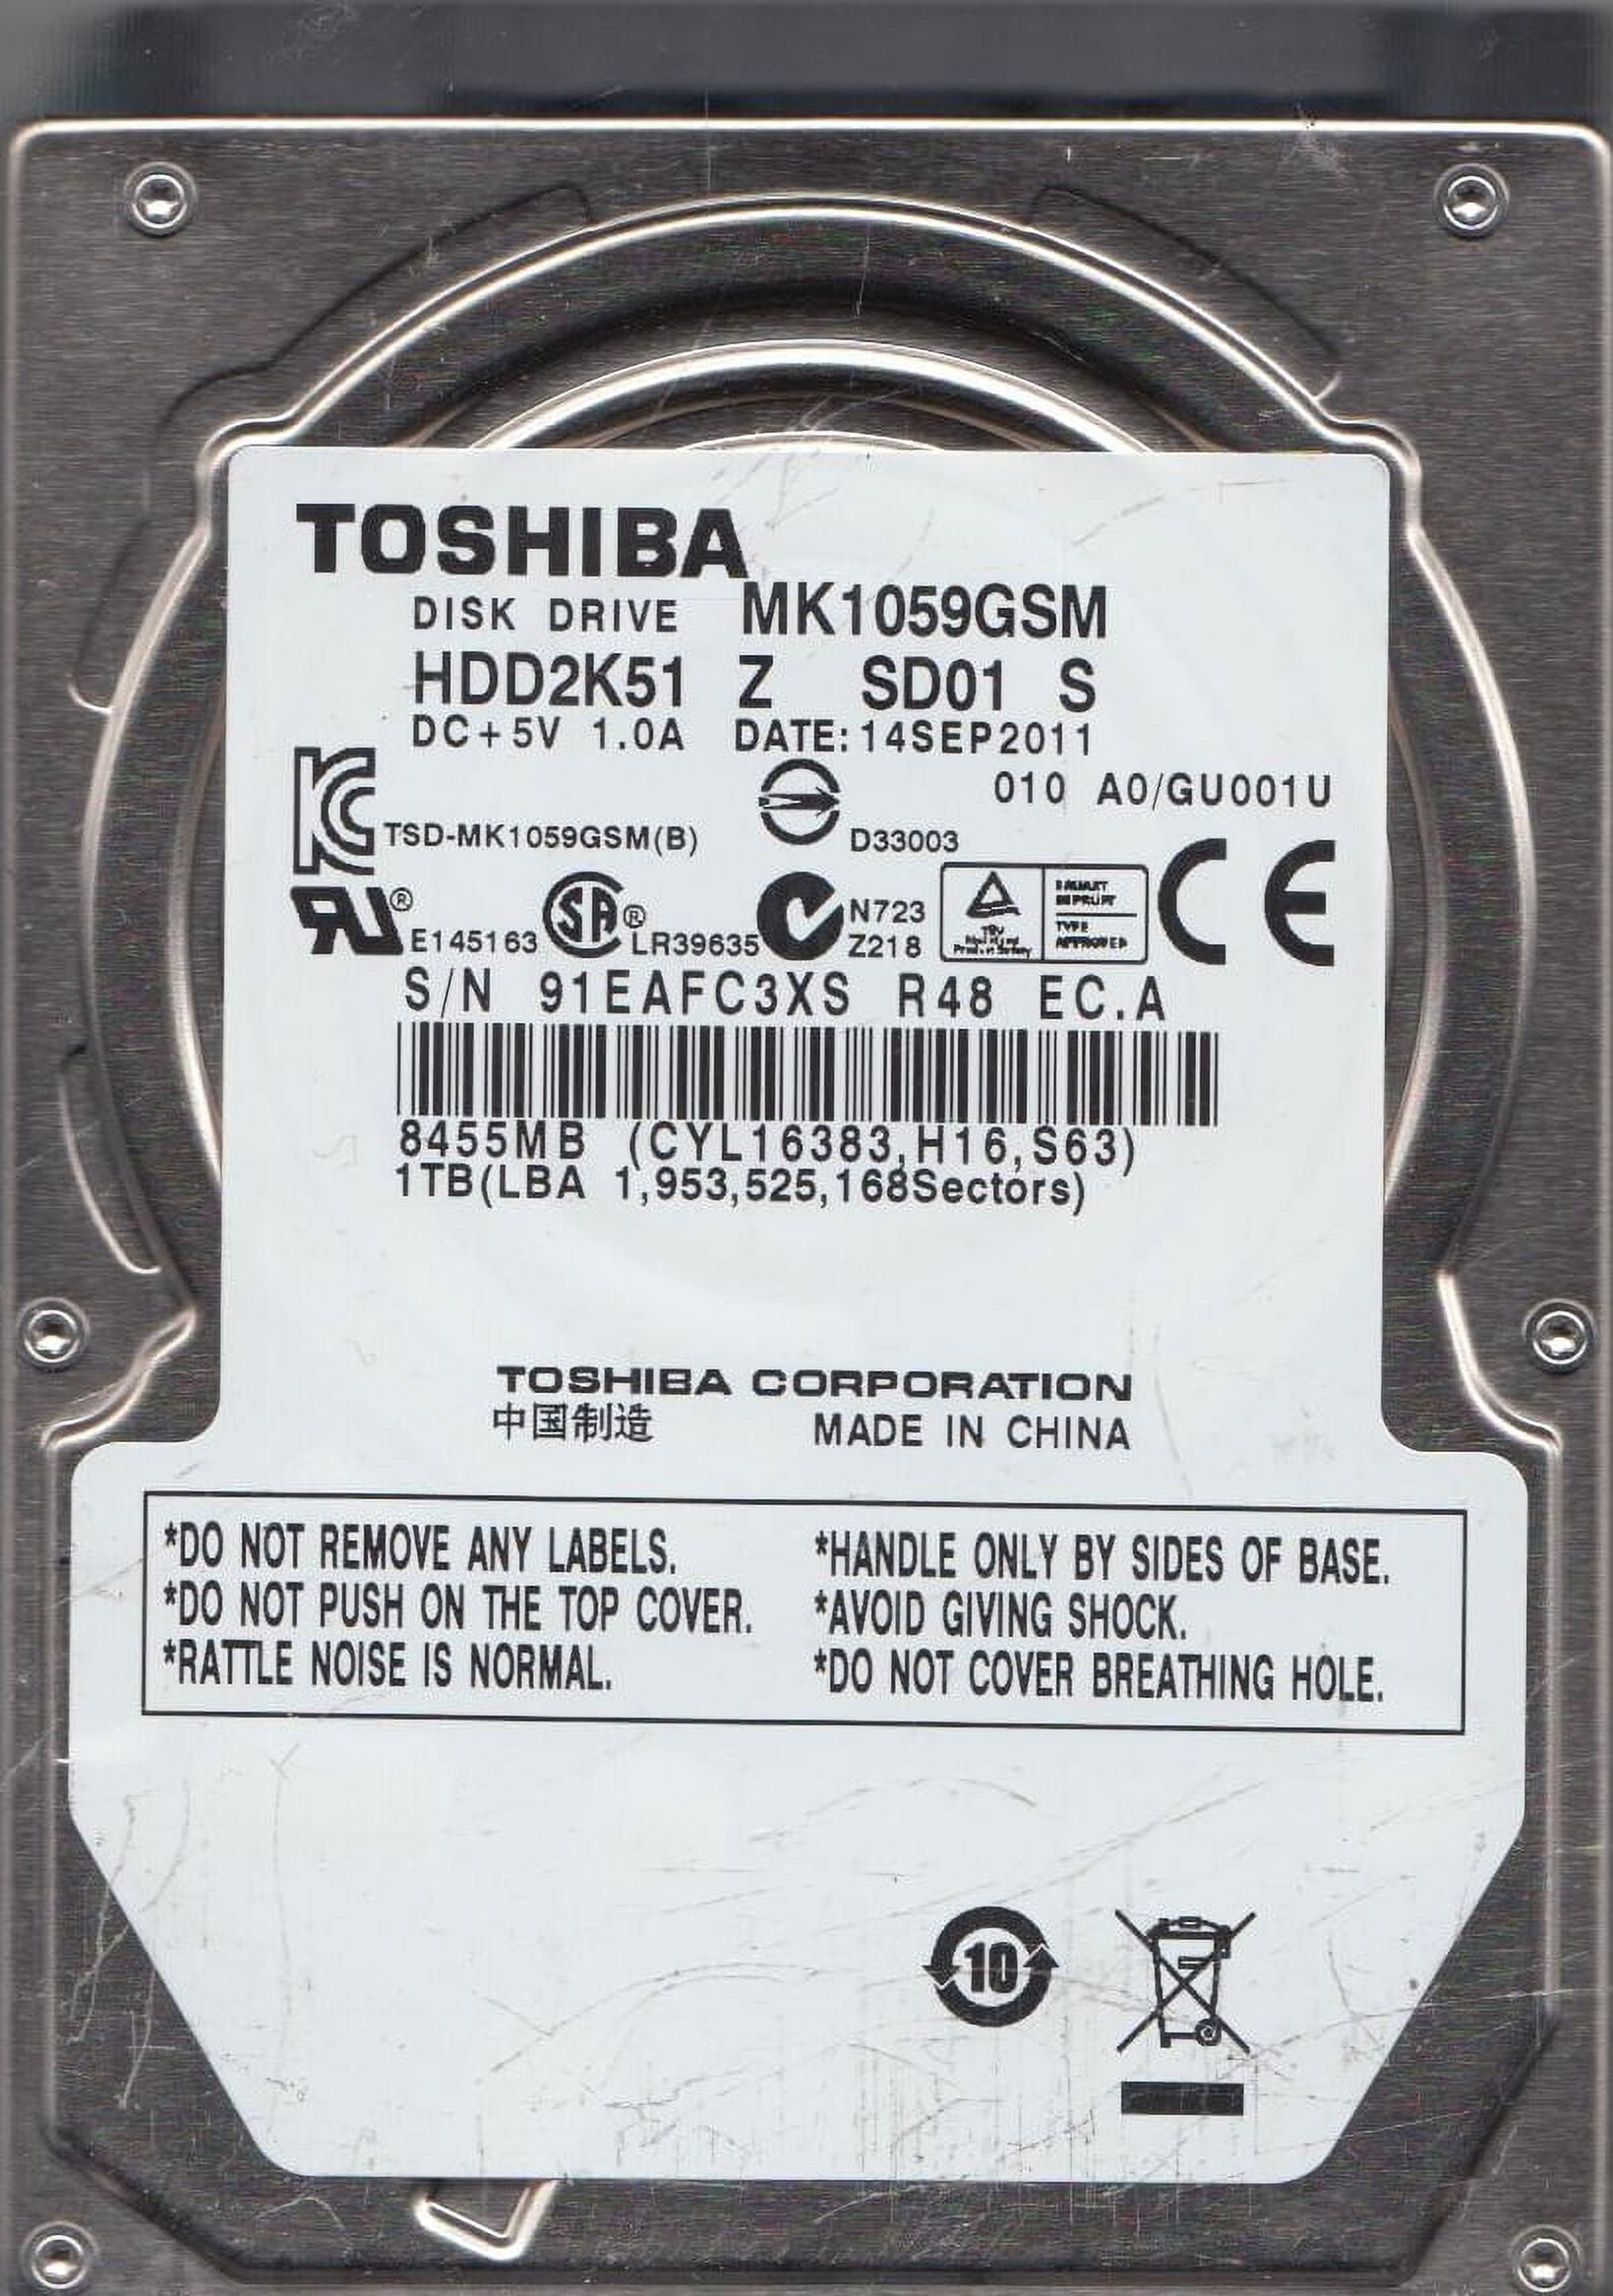 MK1059GSM, A0/GU001U, HDD2K51 Z SD01 S, Toshiba 1TB SATA 2.5 Hard Drive